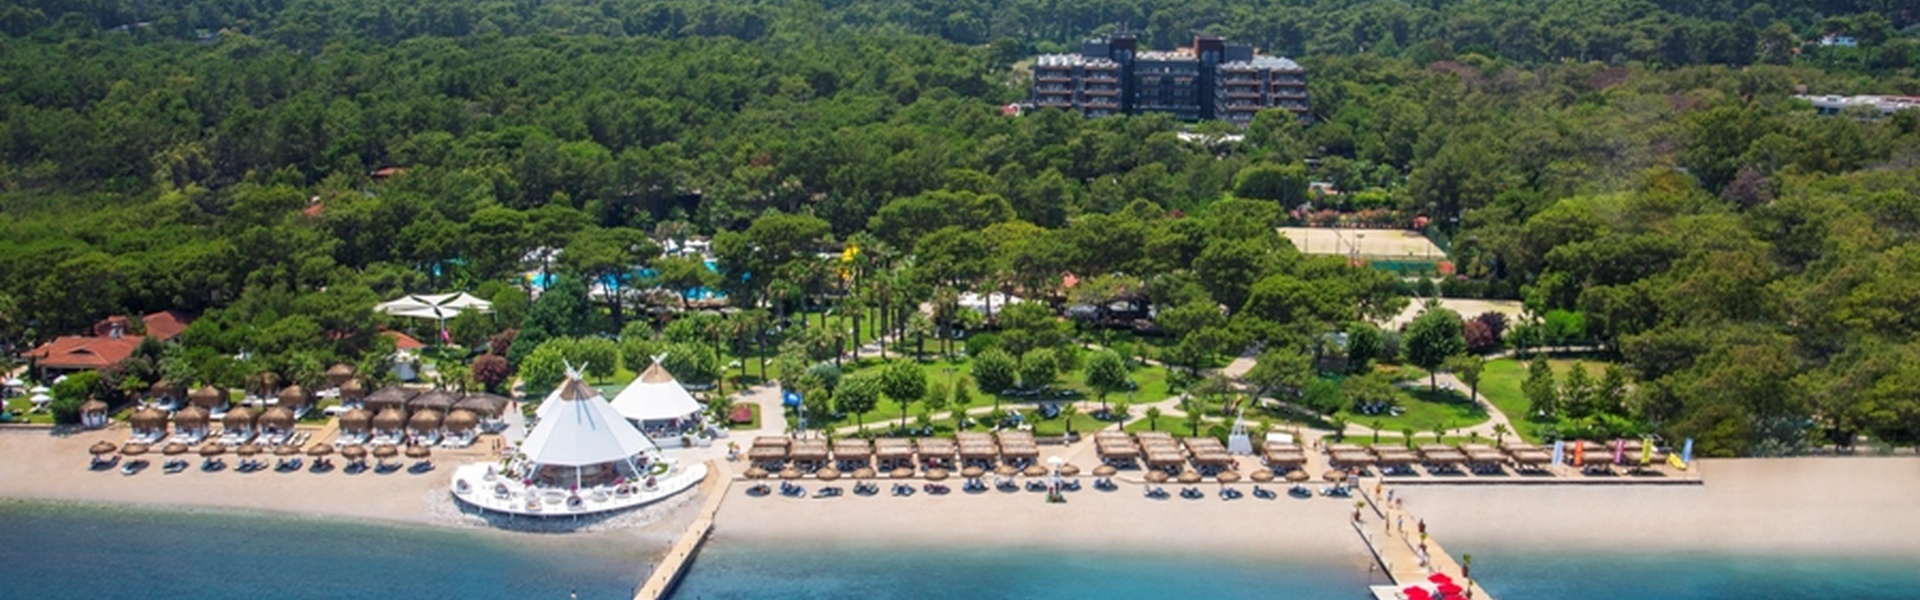 Paloma Renaissance Antalya Beach Resort&SPA - Background